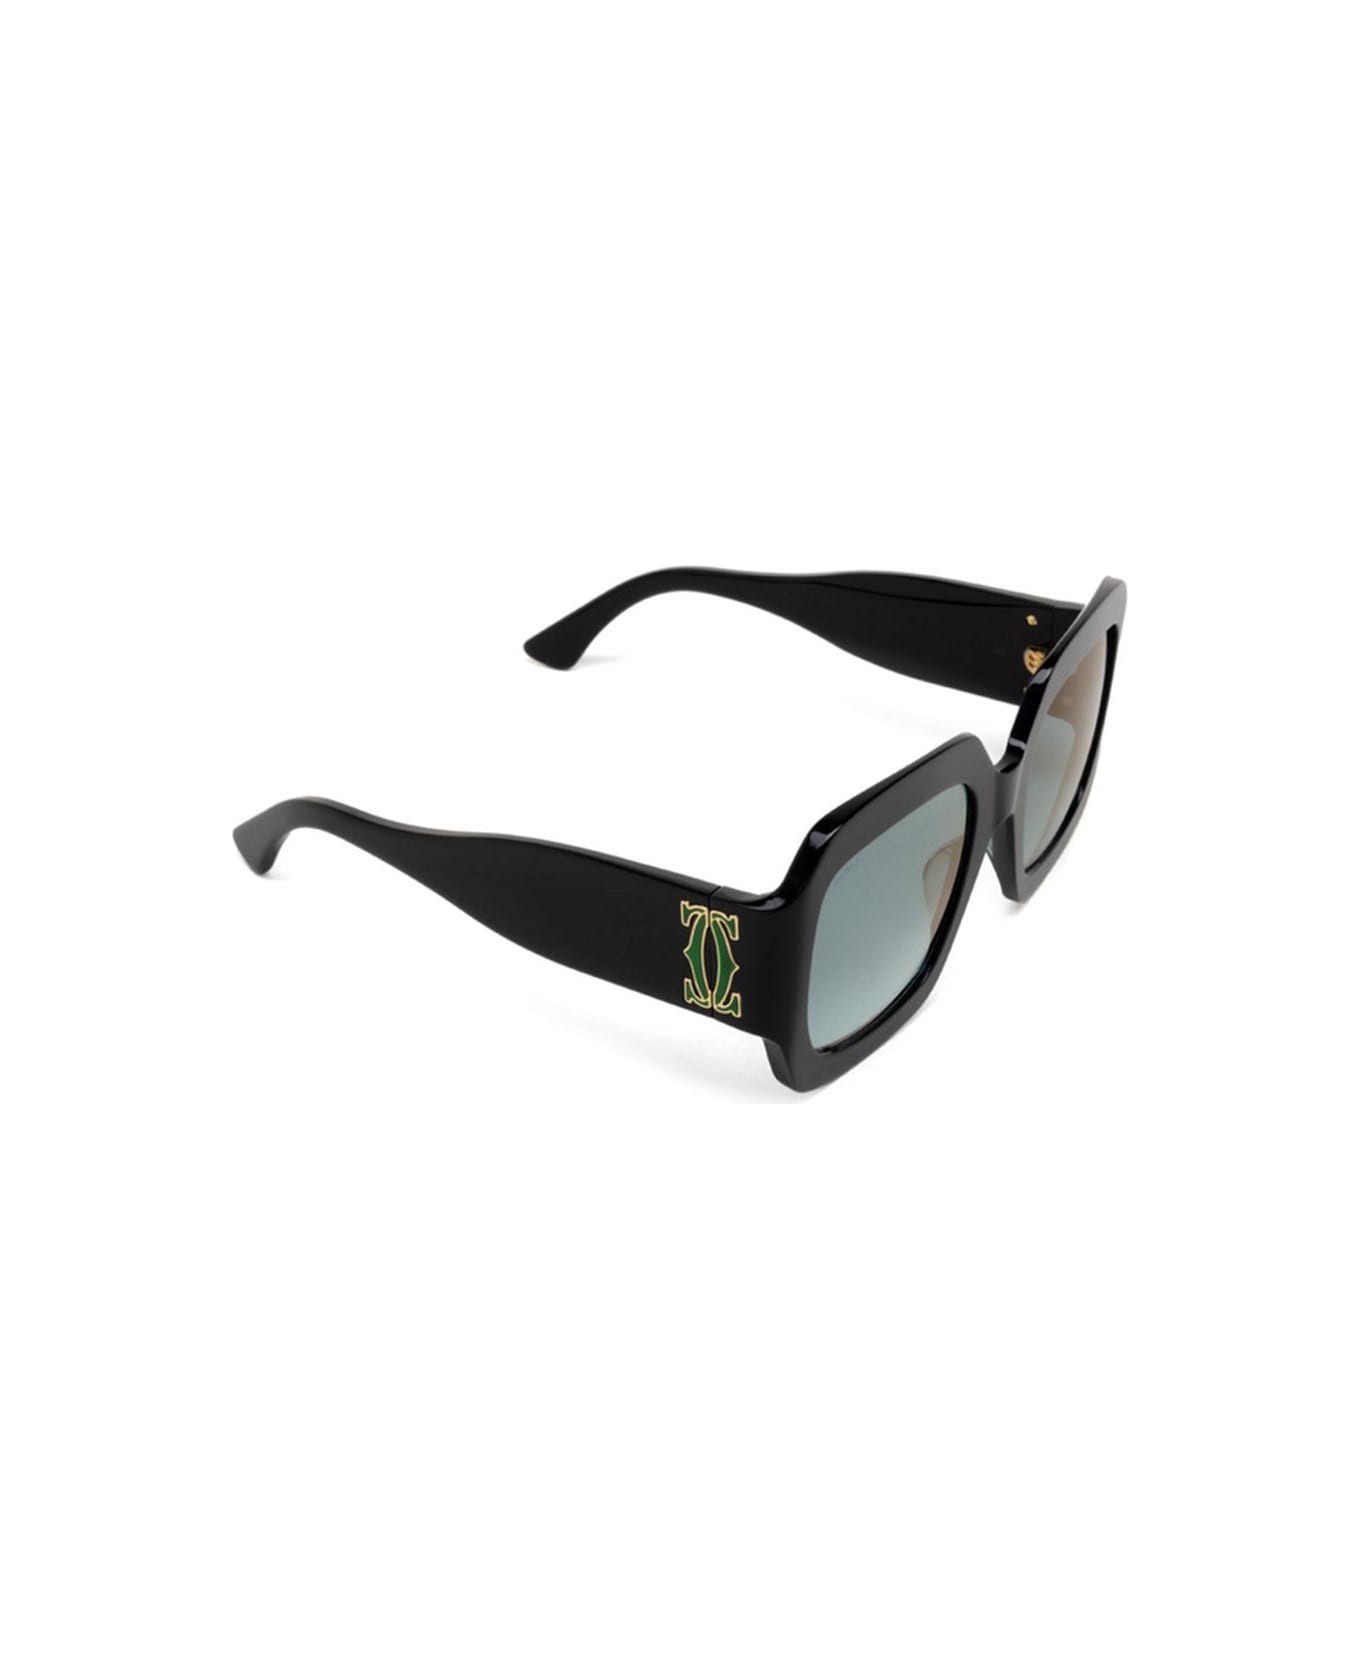 Cartier Eyewear Sunglasses - Nero/Verde